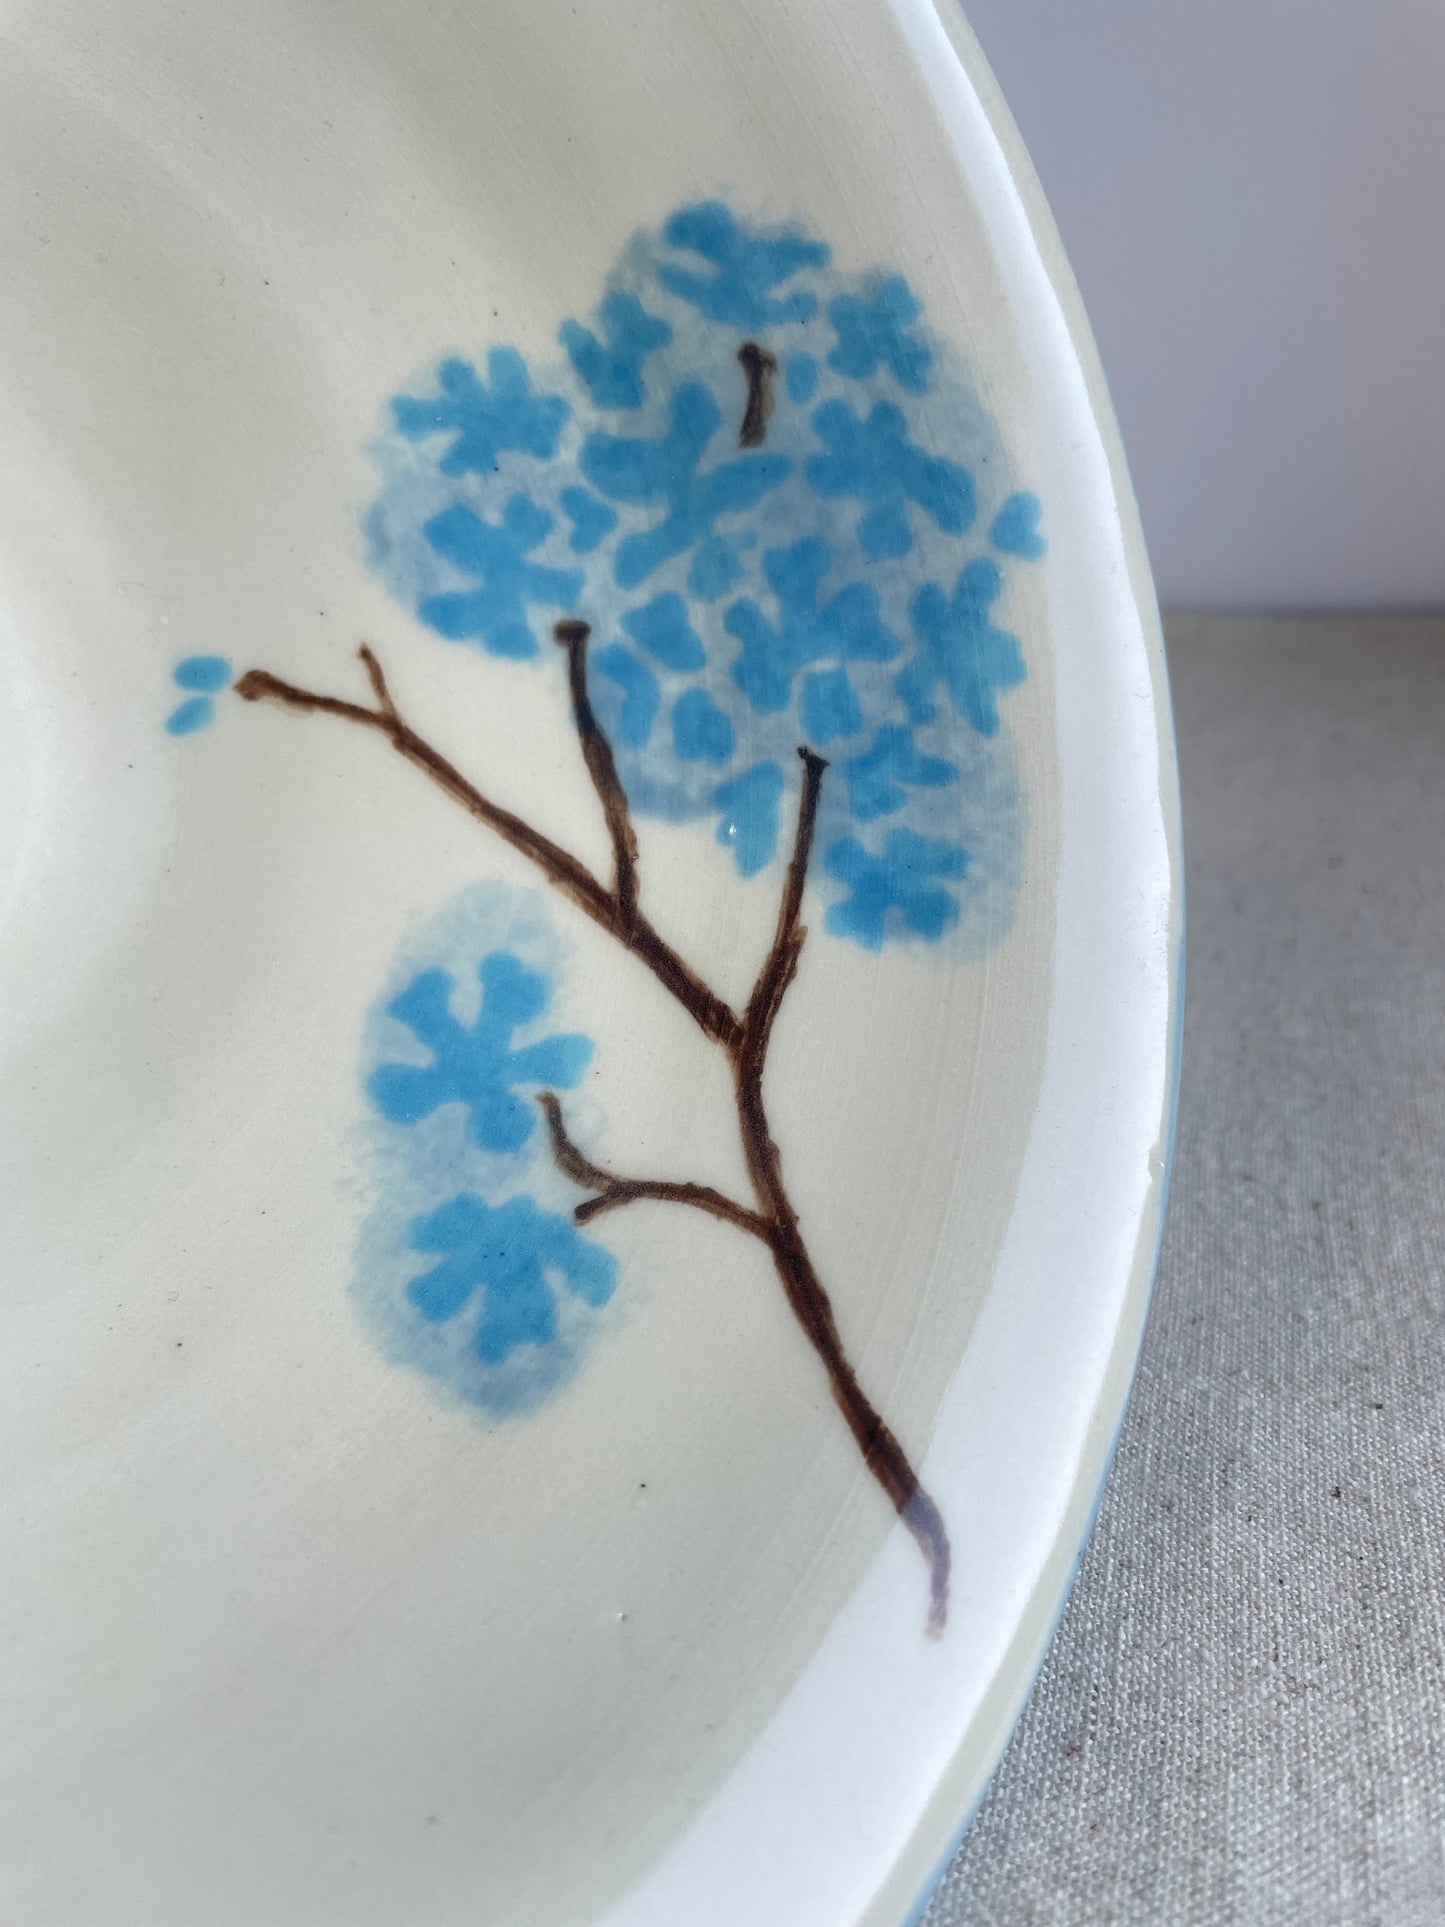 Blue Hydrangea Serving Bowl